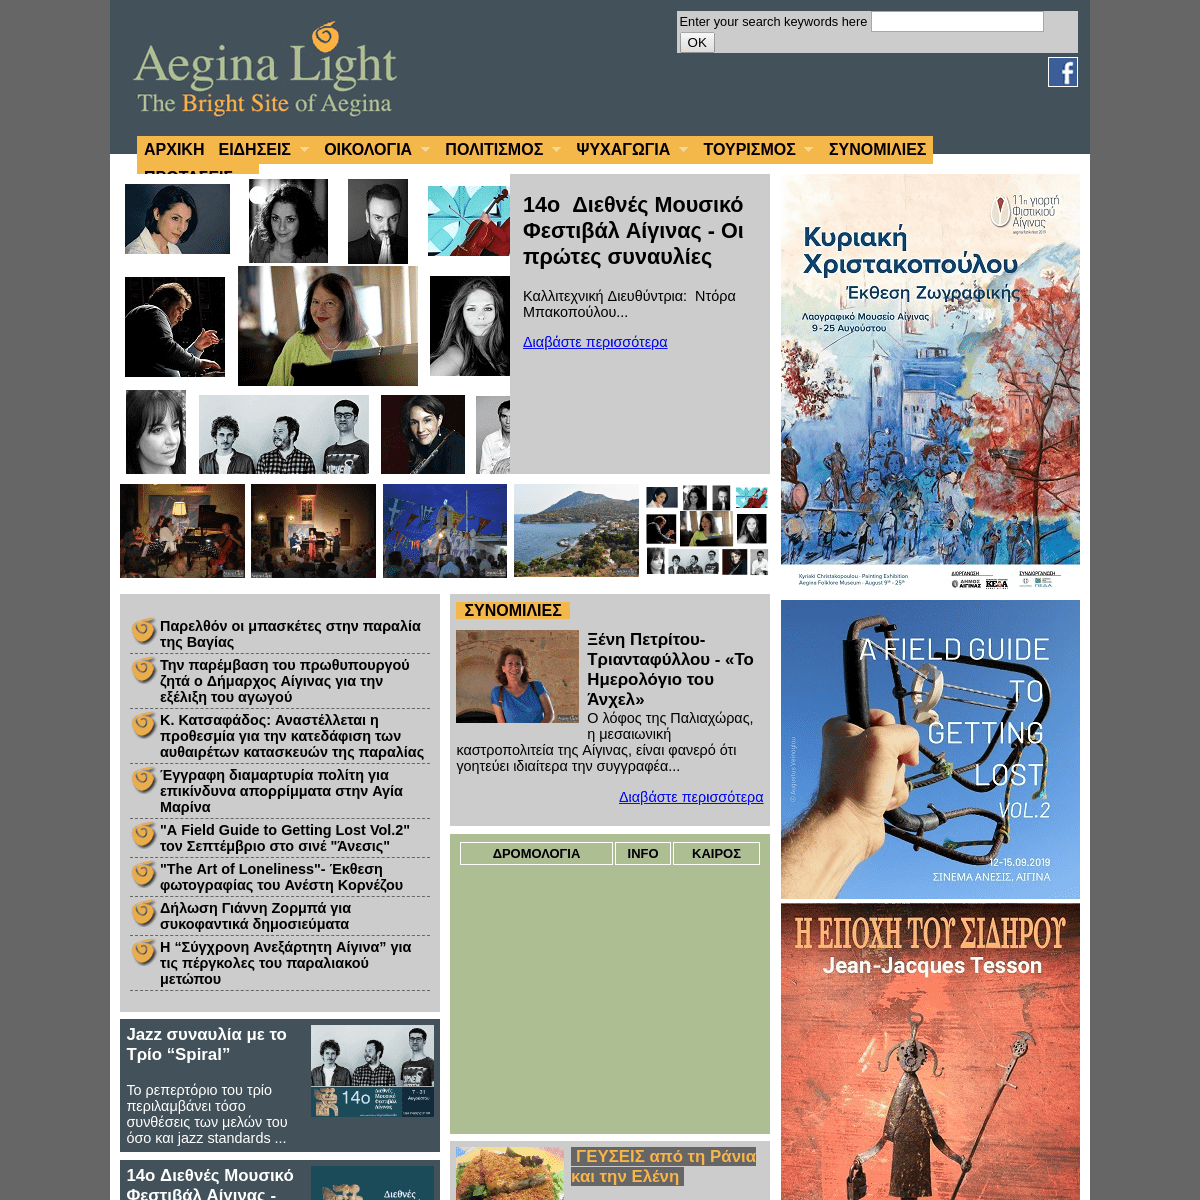 Aegina's Light: Ειδήσεις, Οικολογία, Πολιτισμός, Προτάσεις για την Αίγινα